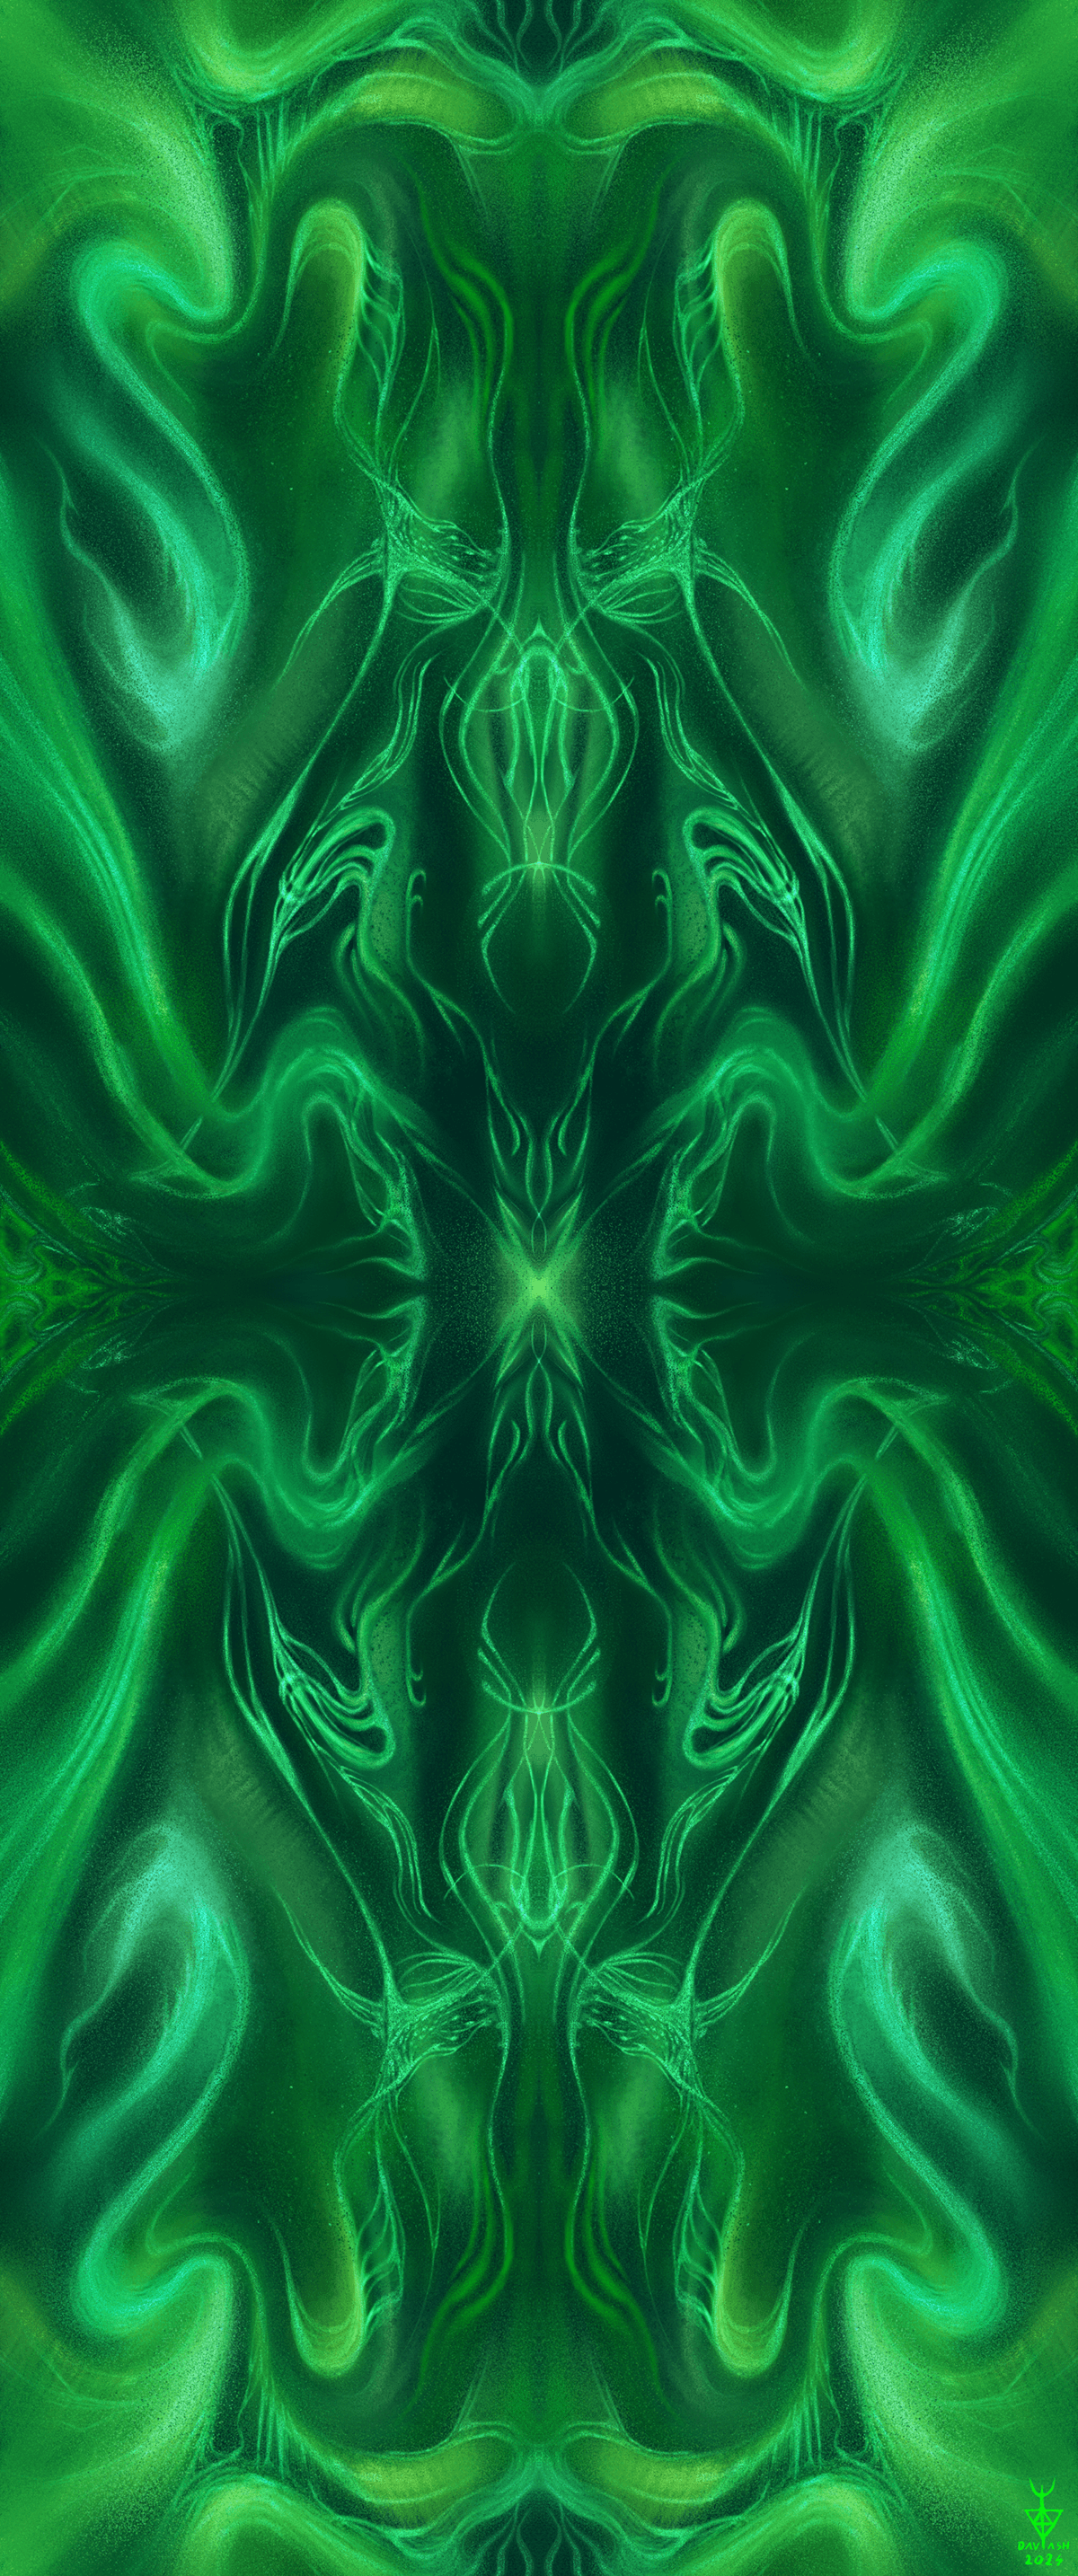 green abstract symmetrical abstract design